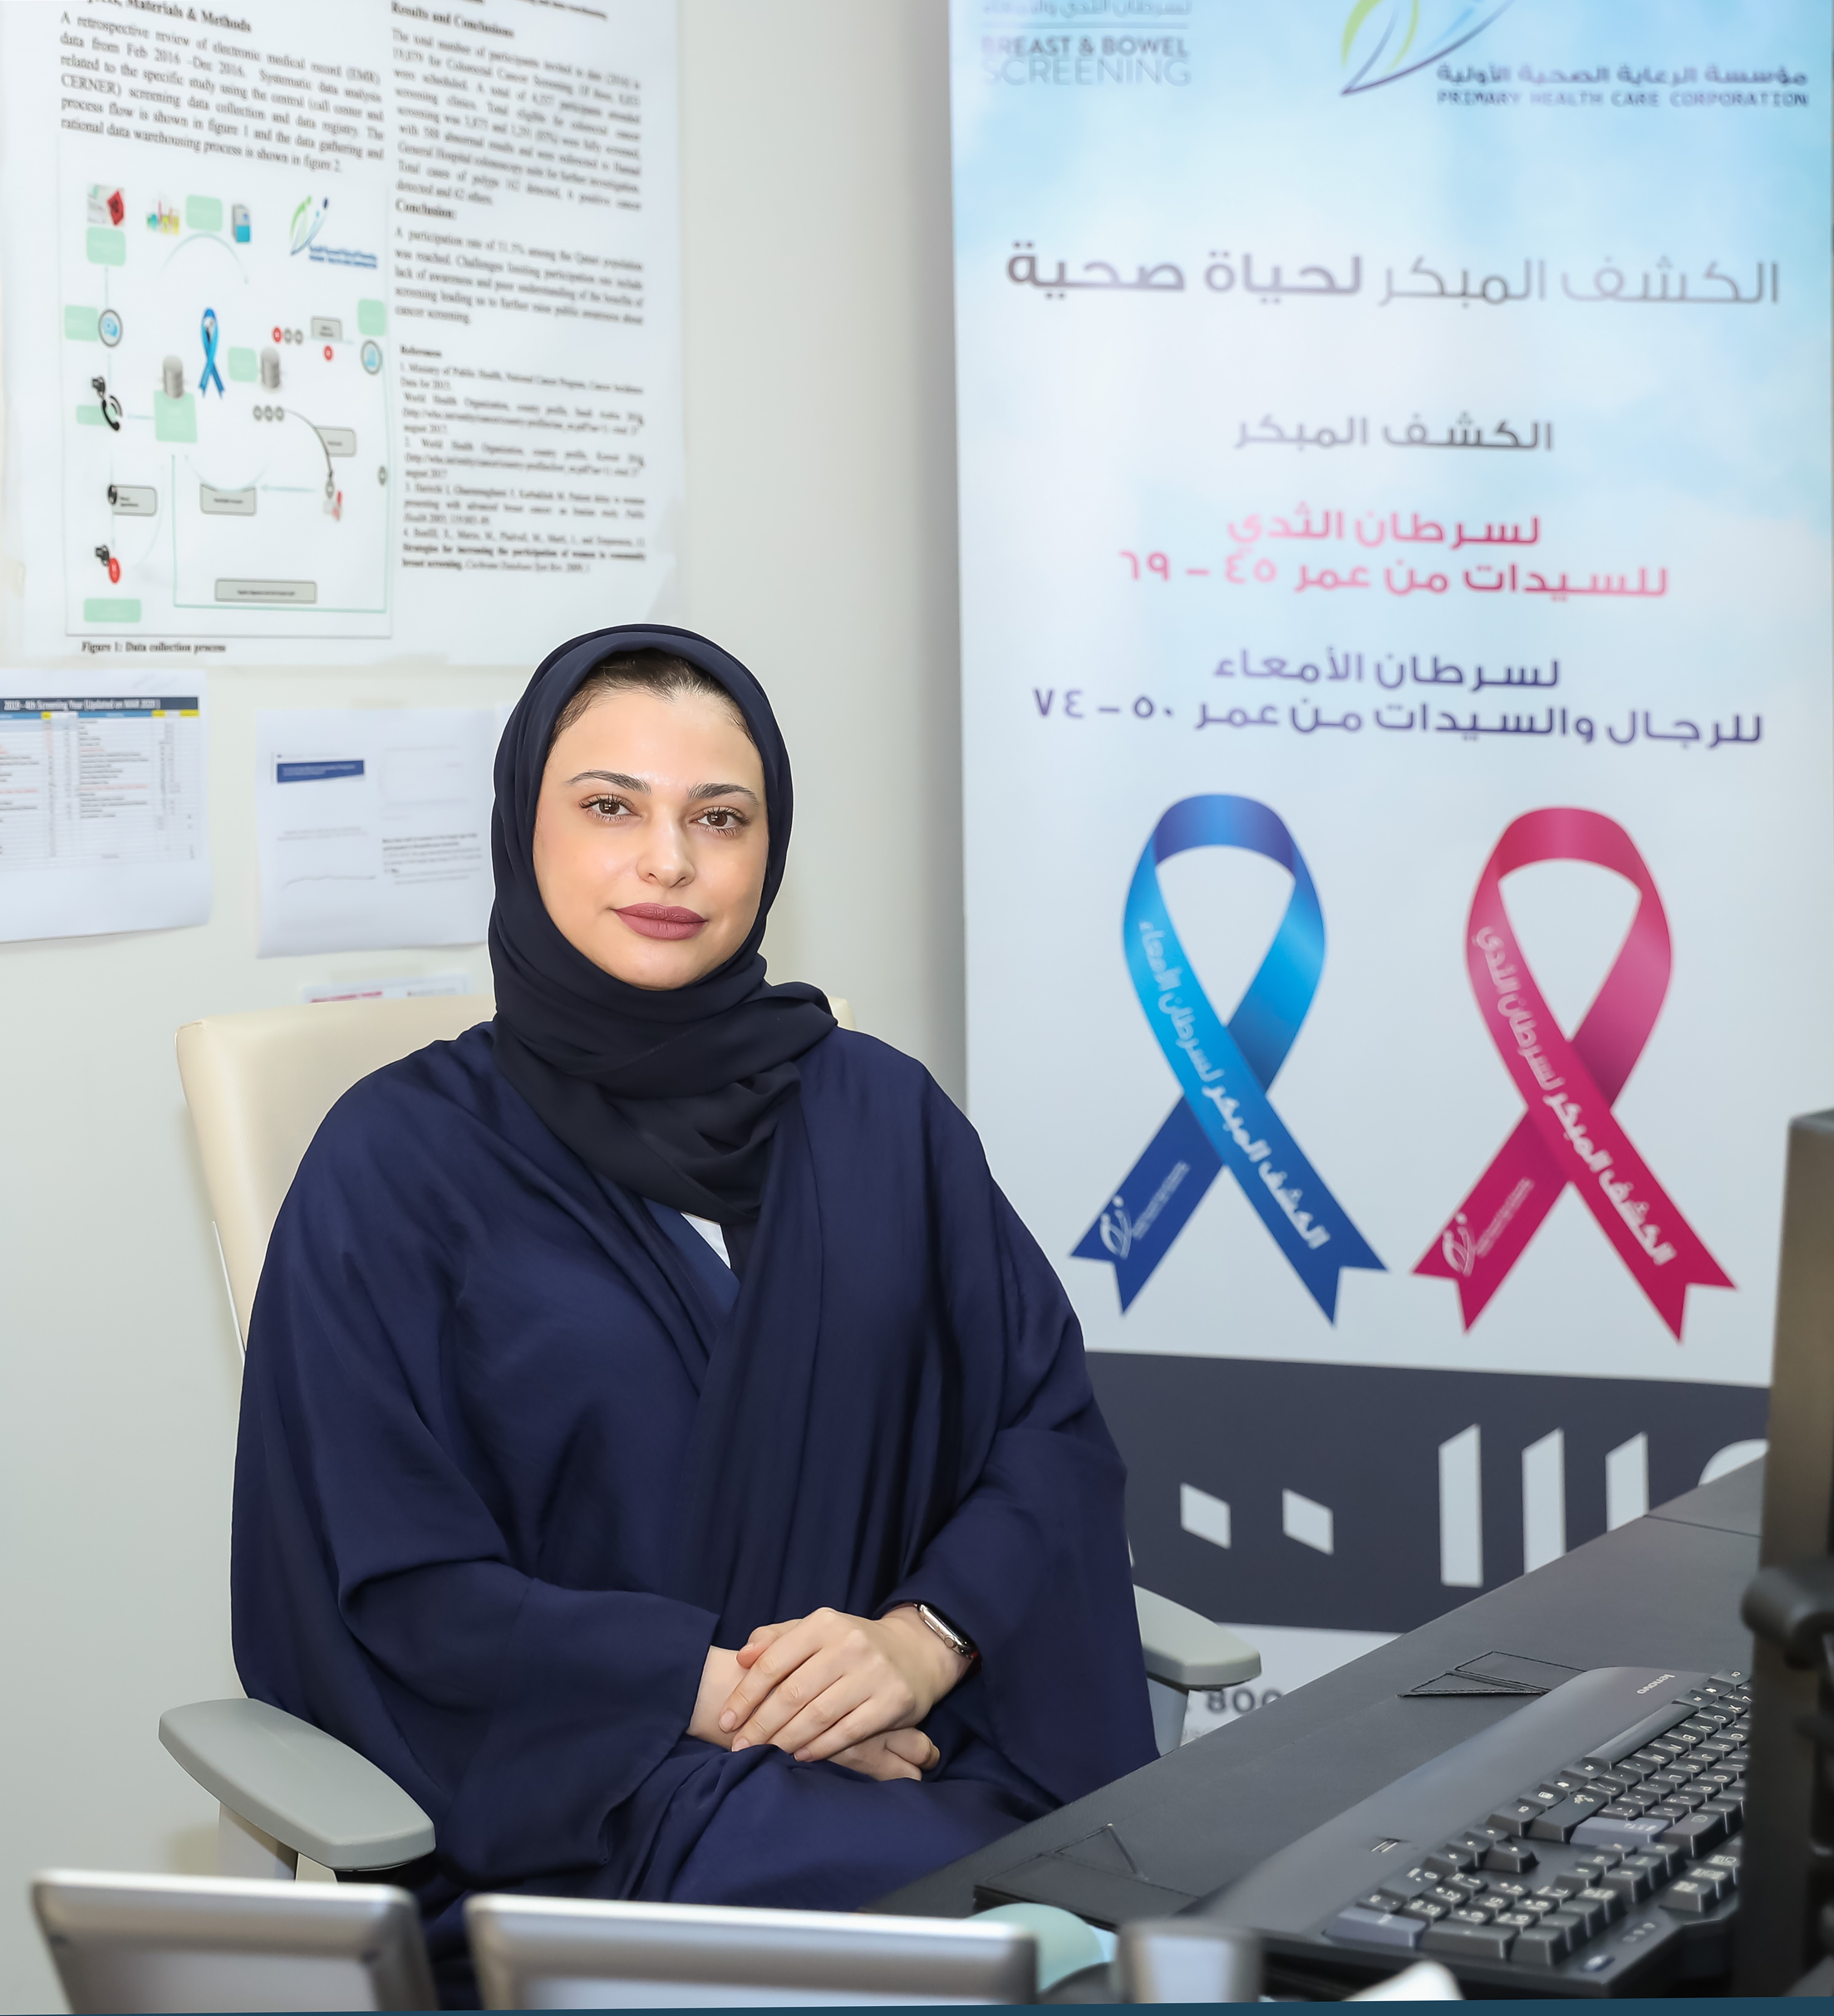 Dr Sheikha Abu Sheikha